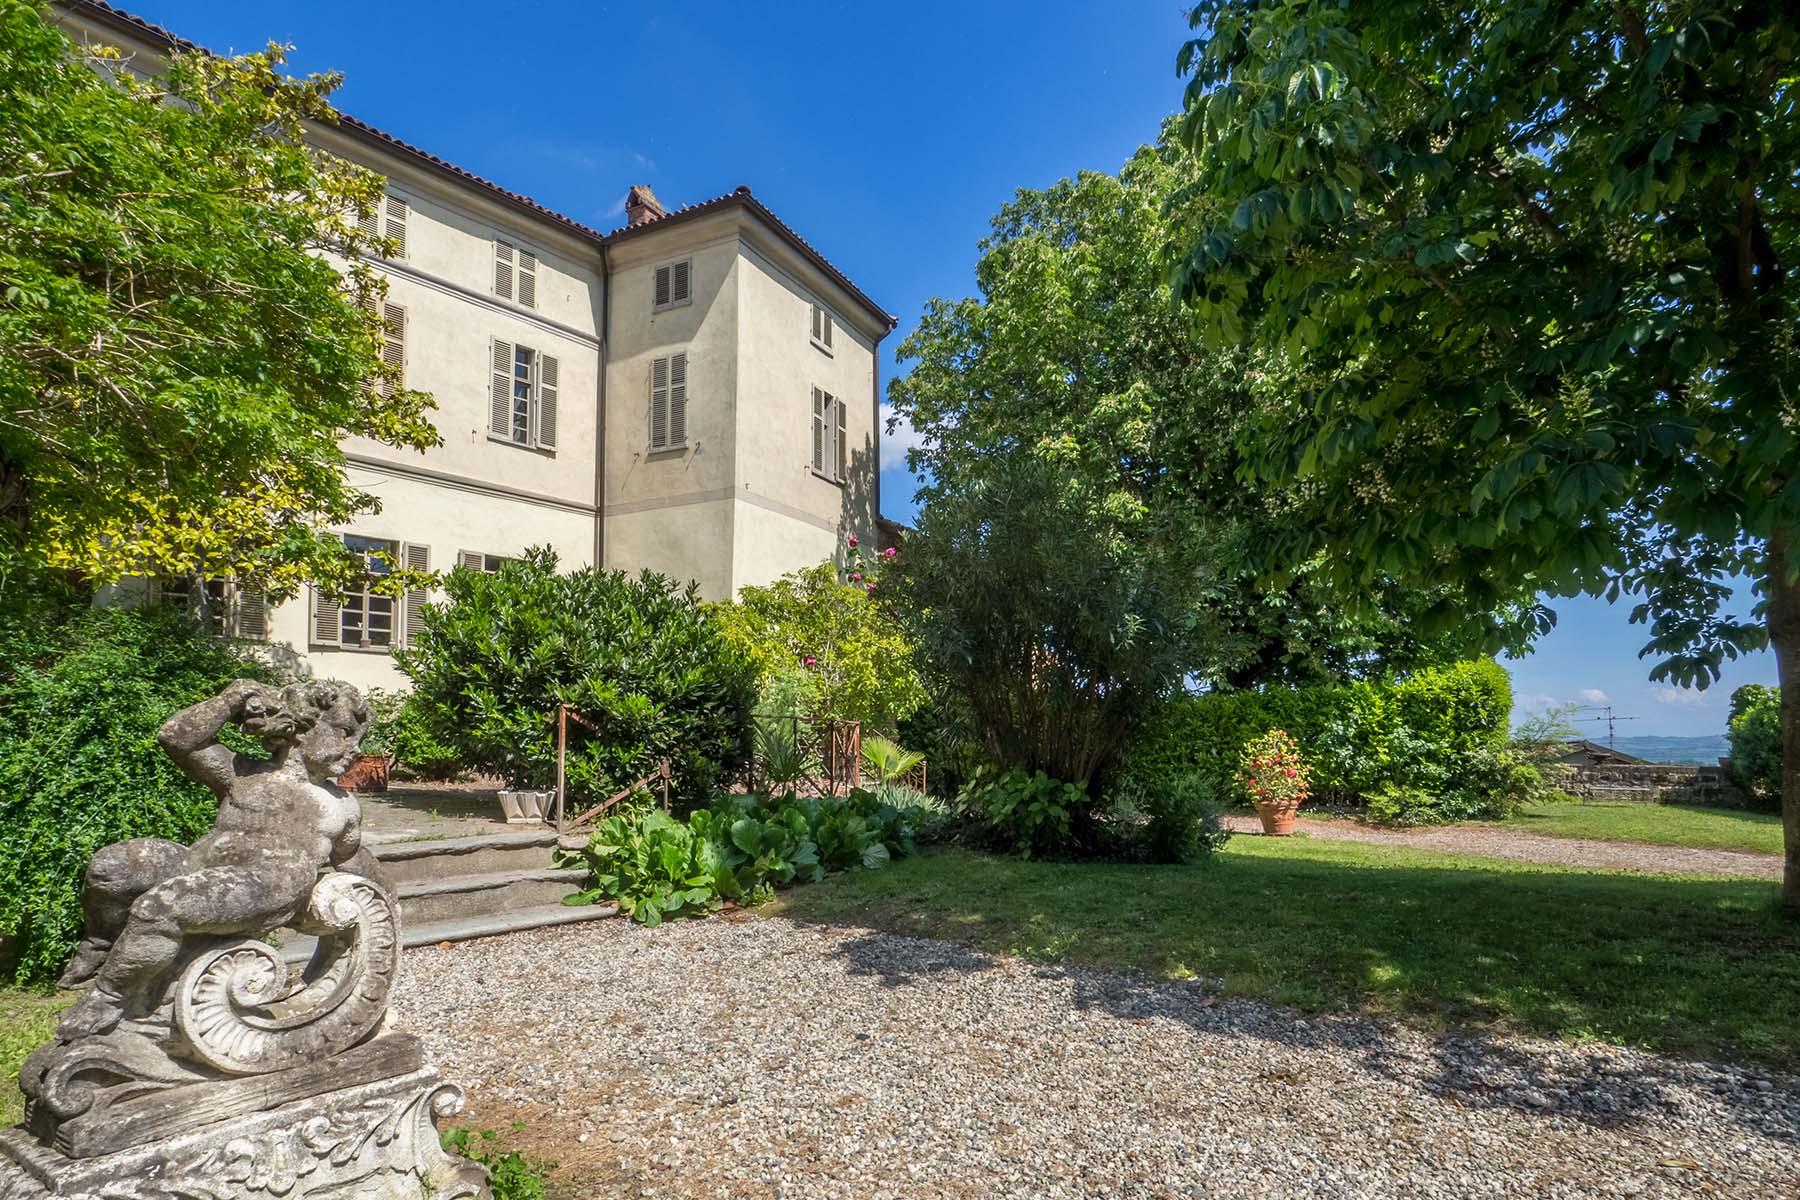 Enchanting historical villa in the heart of the Monferrato region - 1